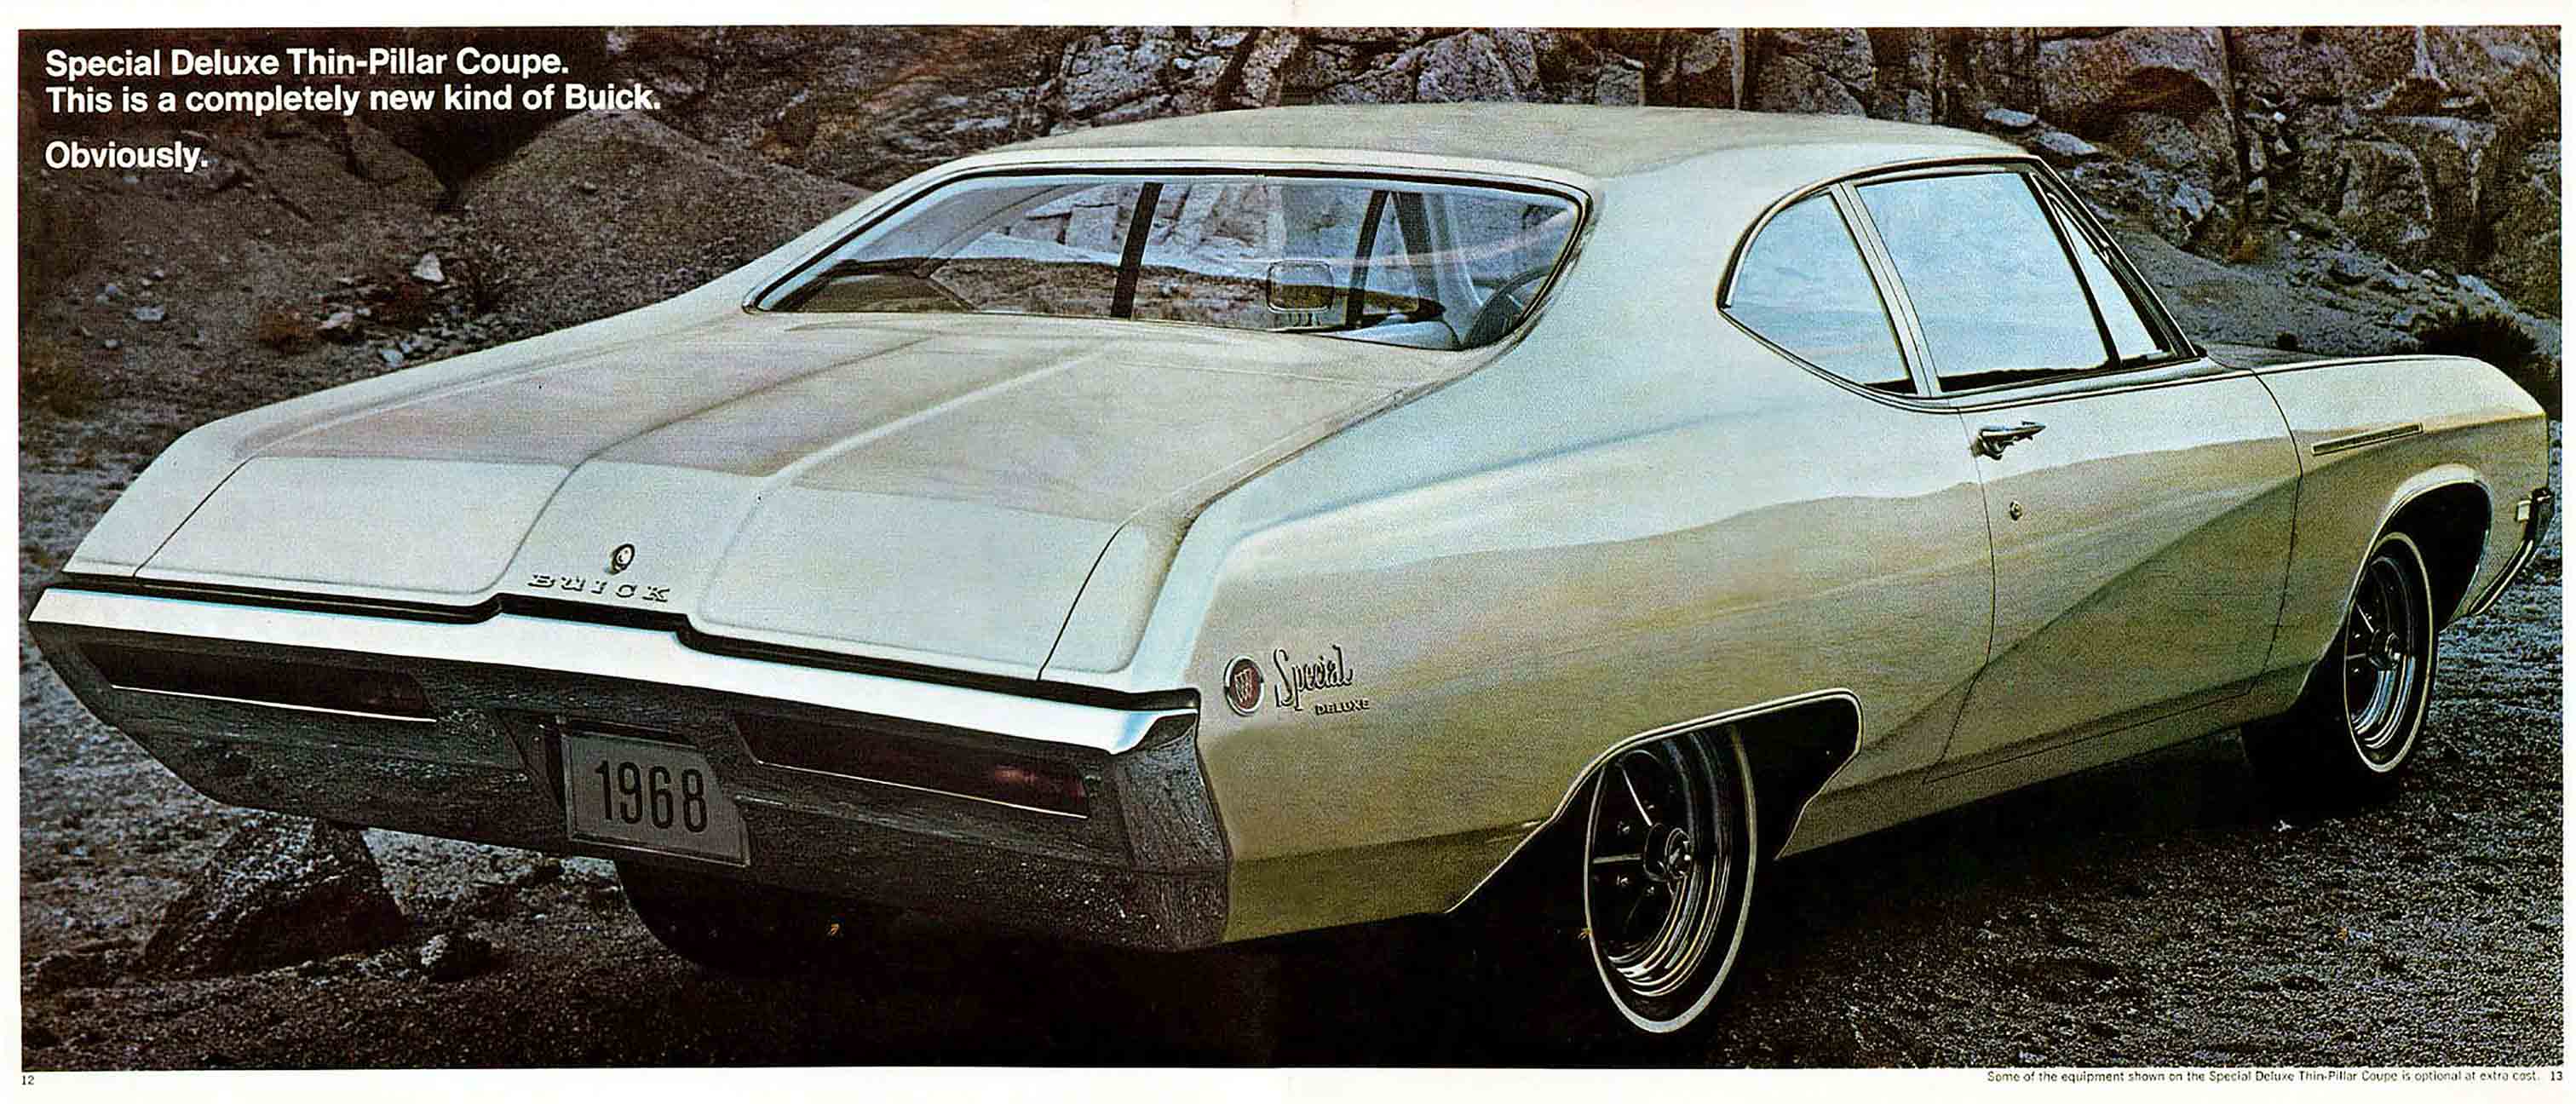 1968 Buick Full Line Prestige Brochure-12-13